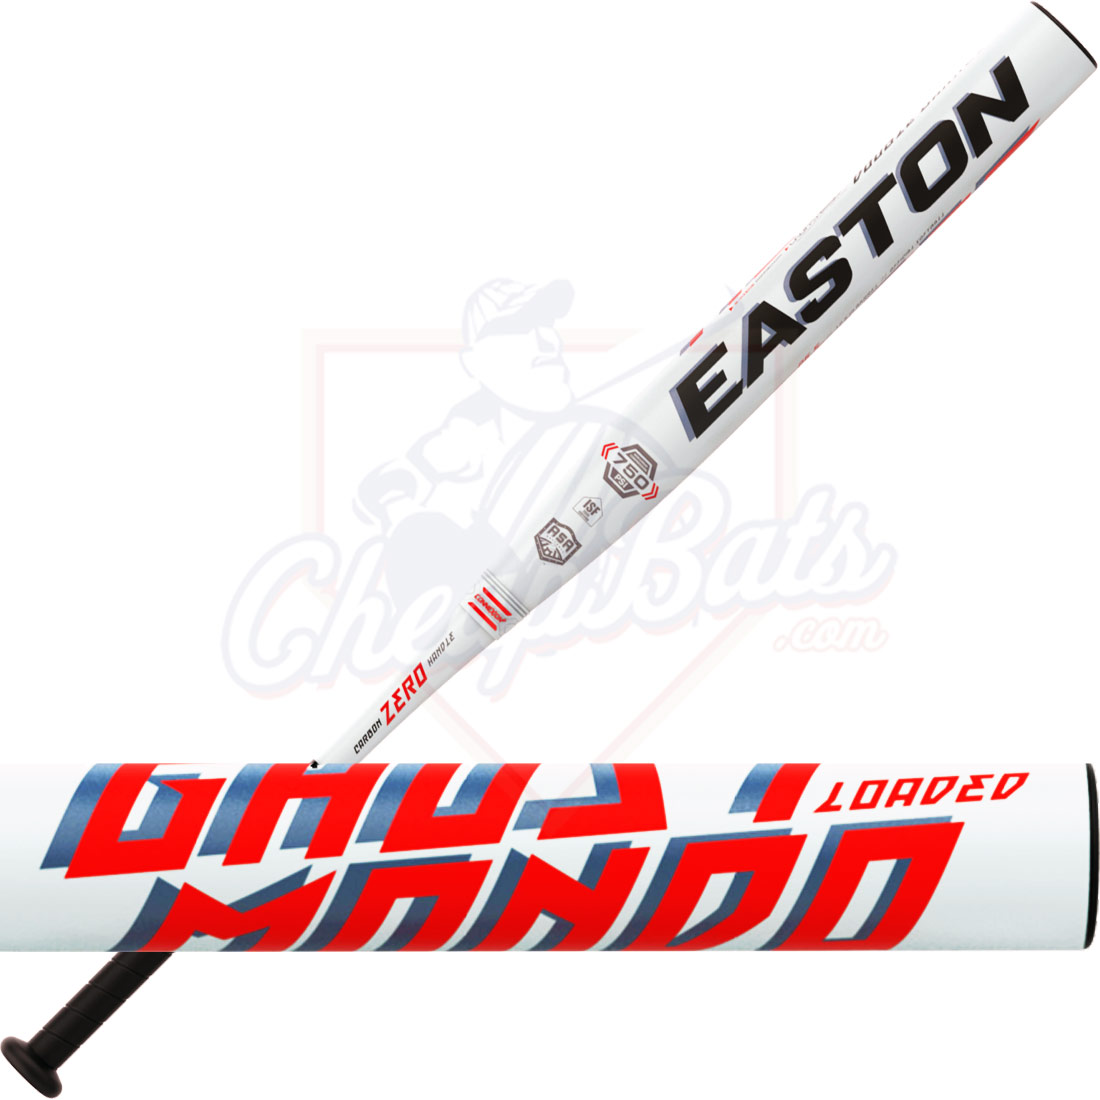 2021 Easton Ghostmondo Slowpitch Softball Bat Loaded ASA USA SP21GHRES